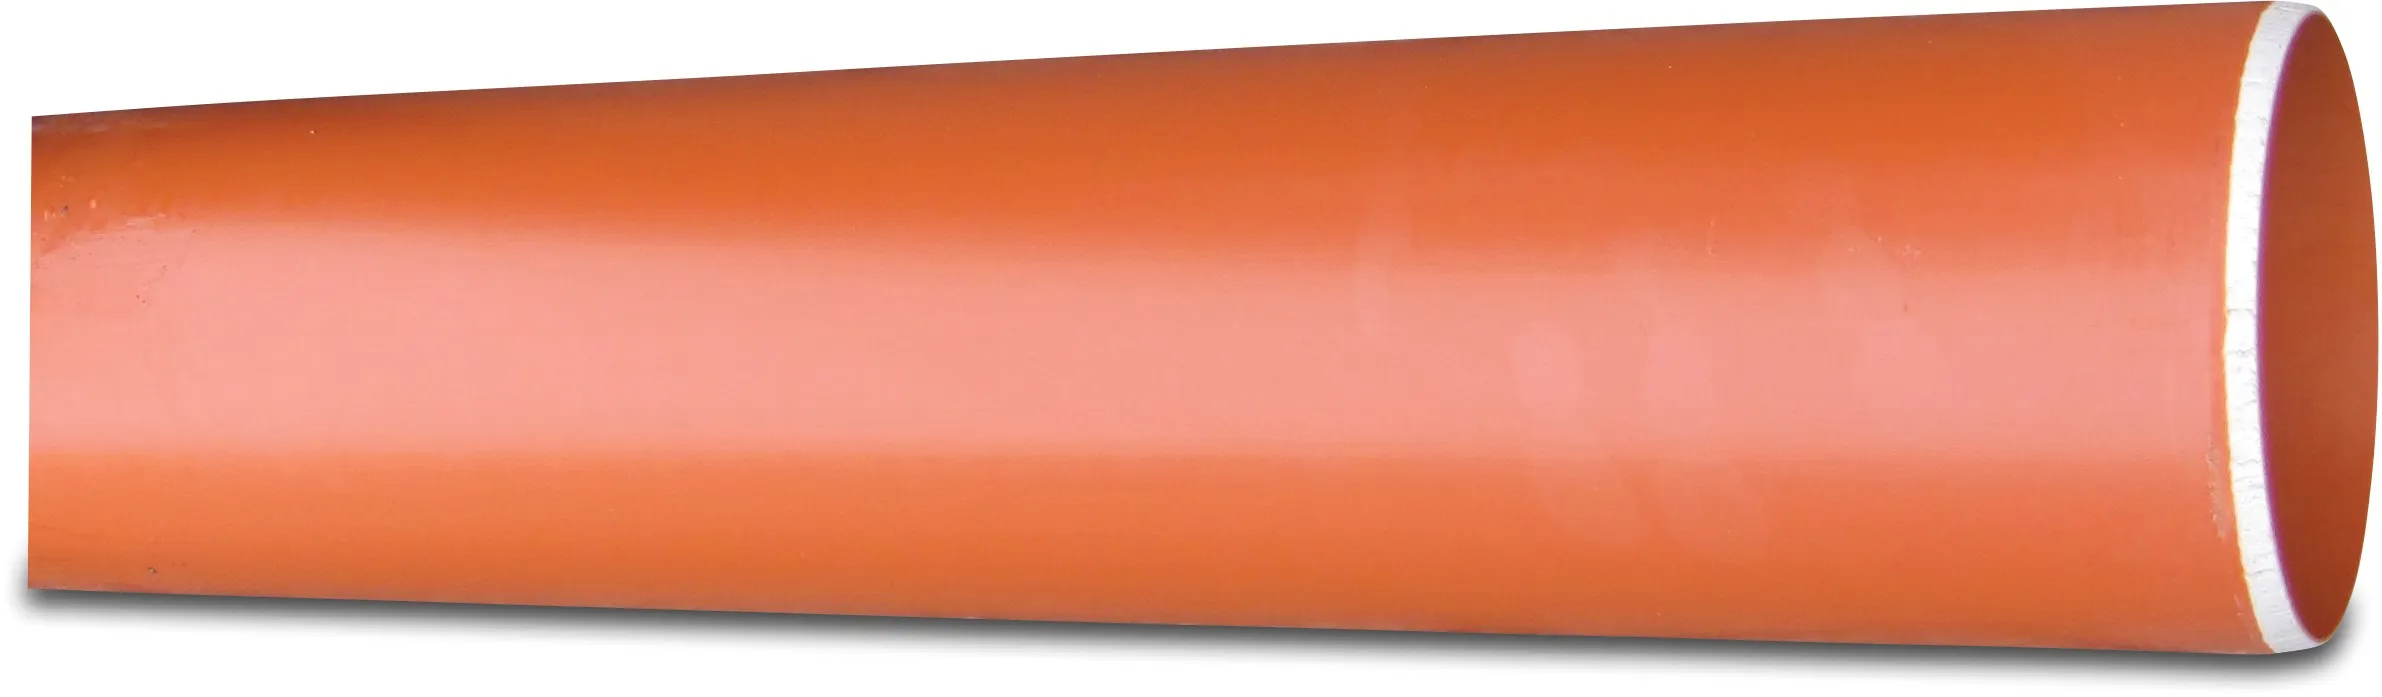 Abflussrohr PVC-U 110 mm x 3,2 mm SN4 Glatt Rostbraun 5m KOMO/BENOR